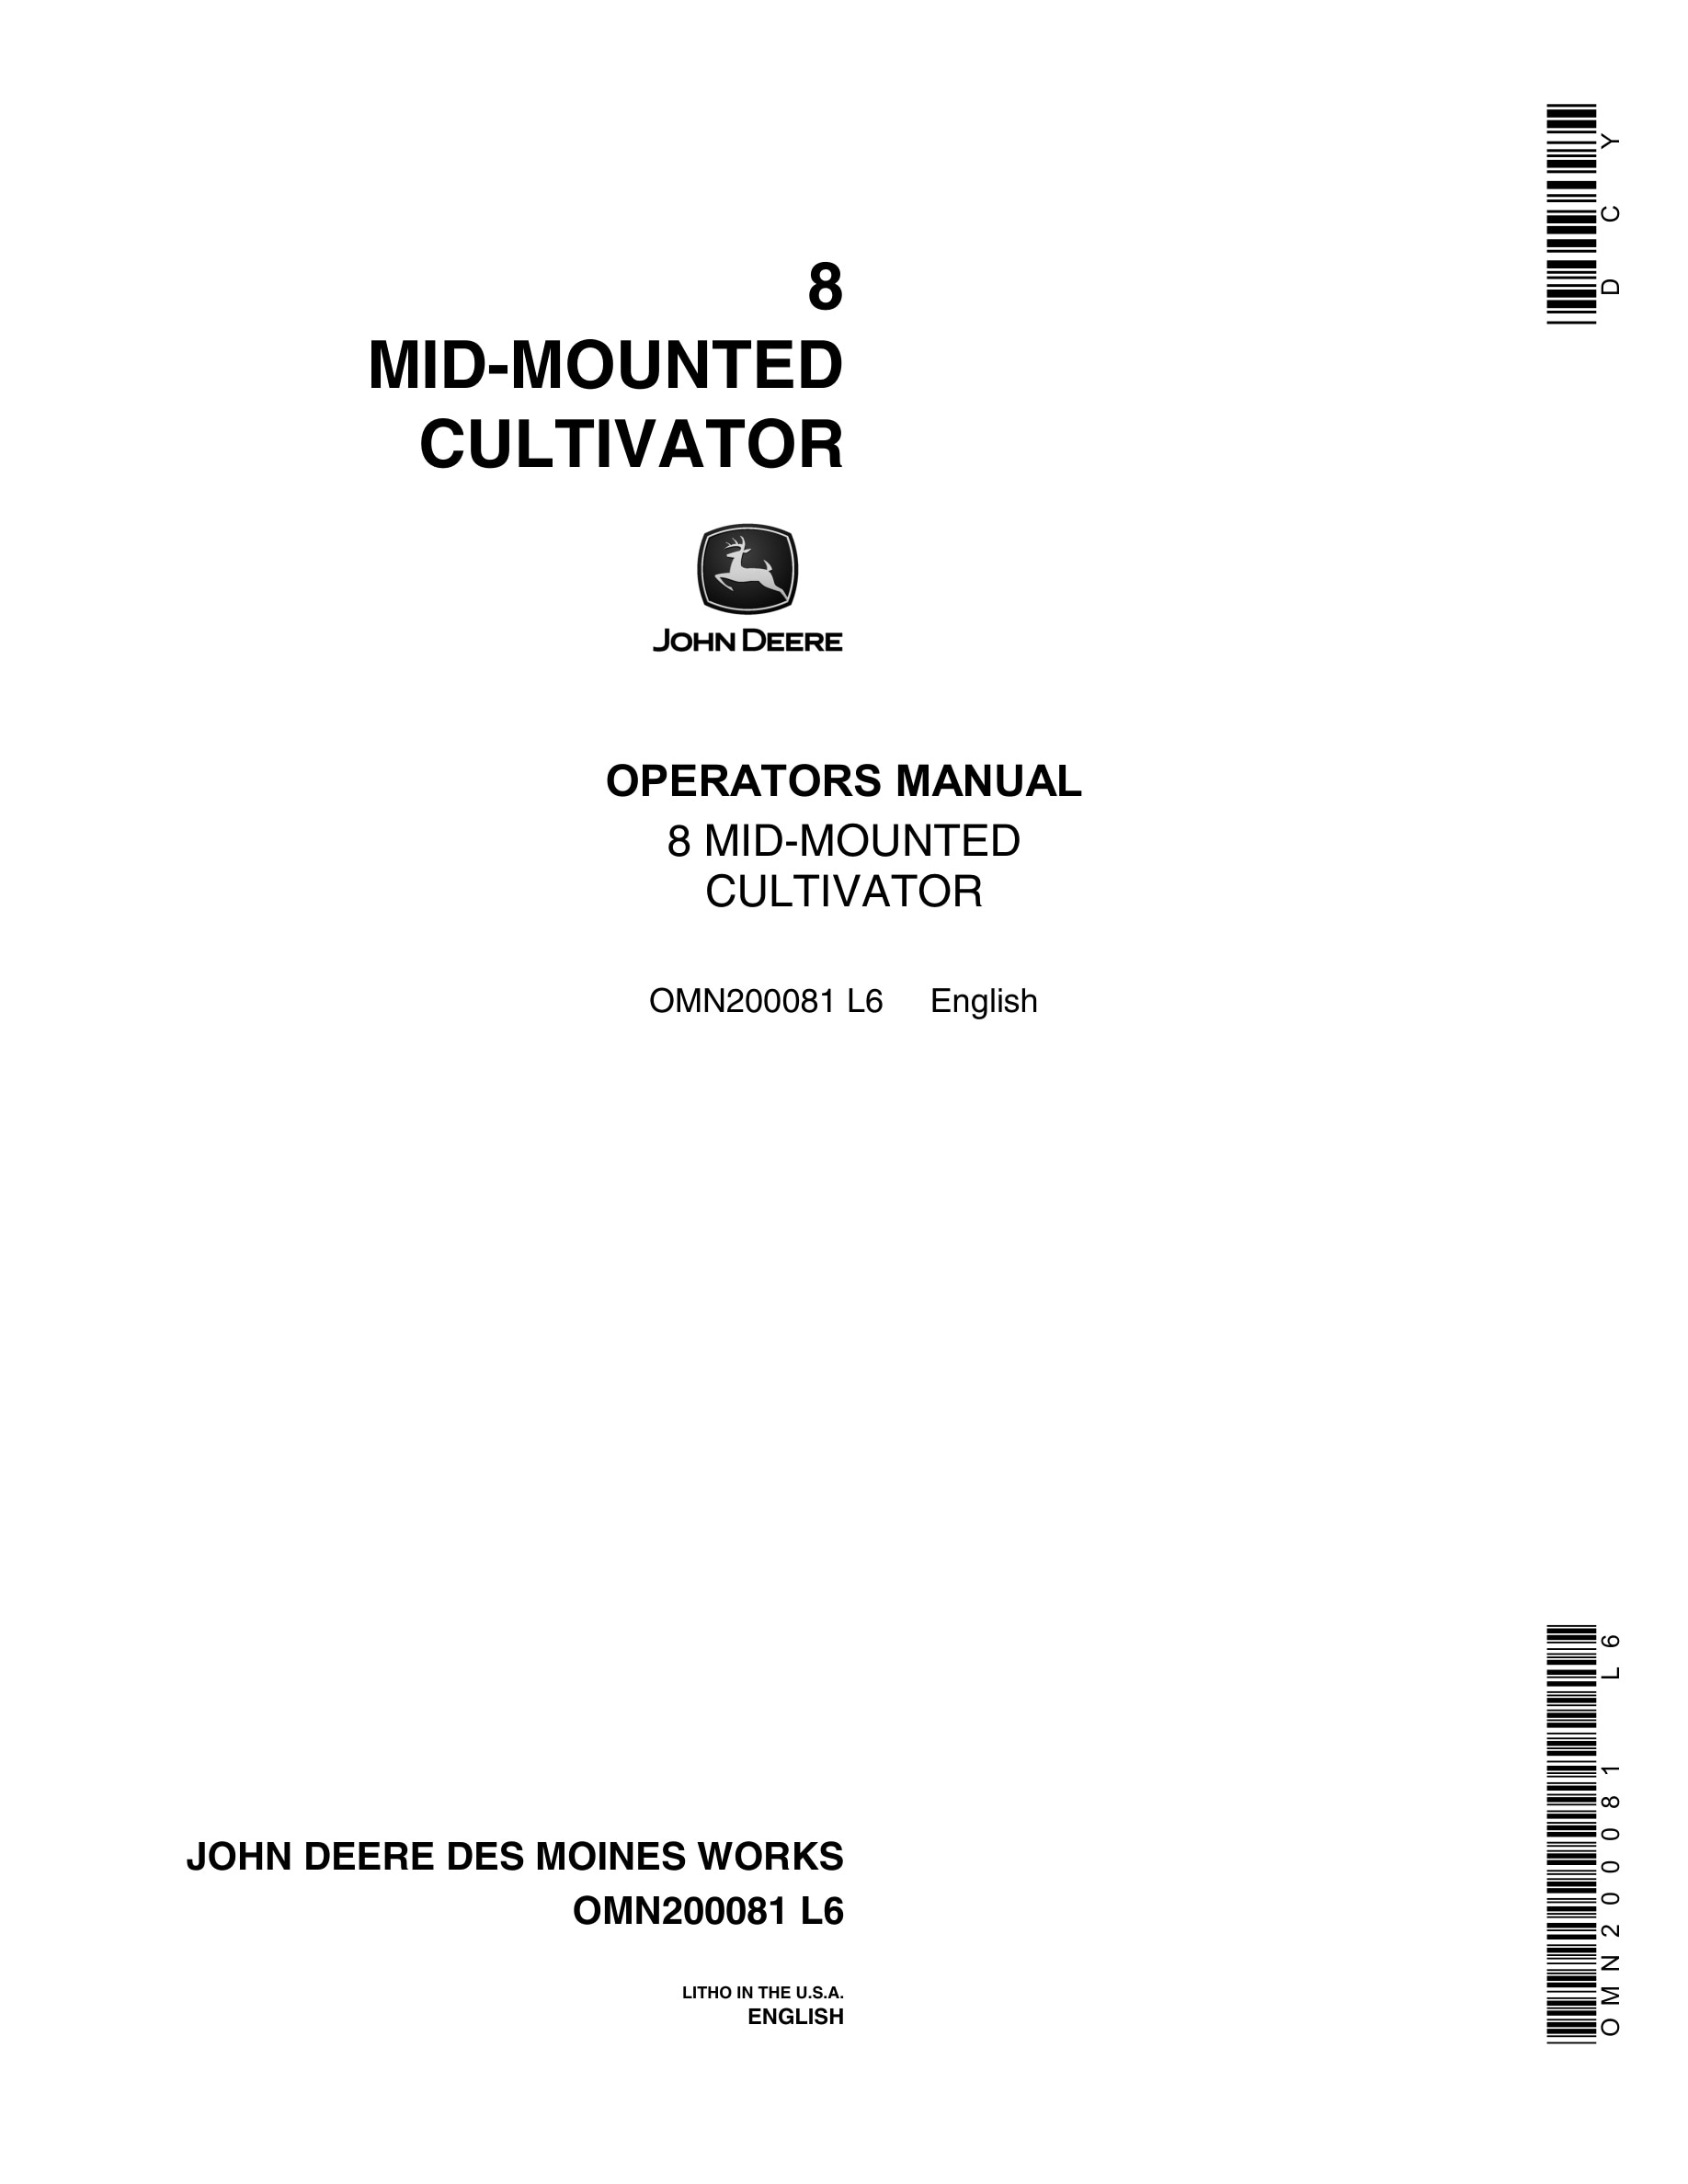 John Deere 8 MID-MOUNTED CULTIVATOR Operator Manual OMN200081-1